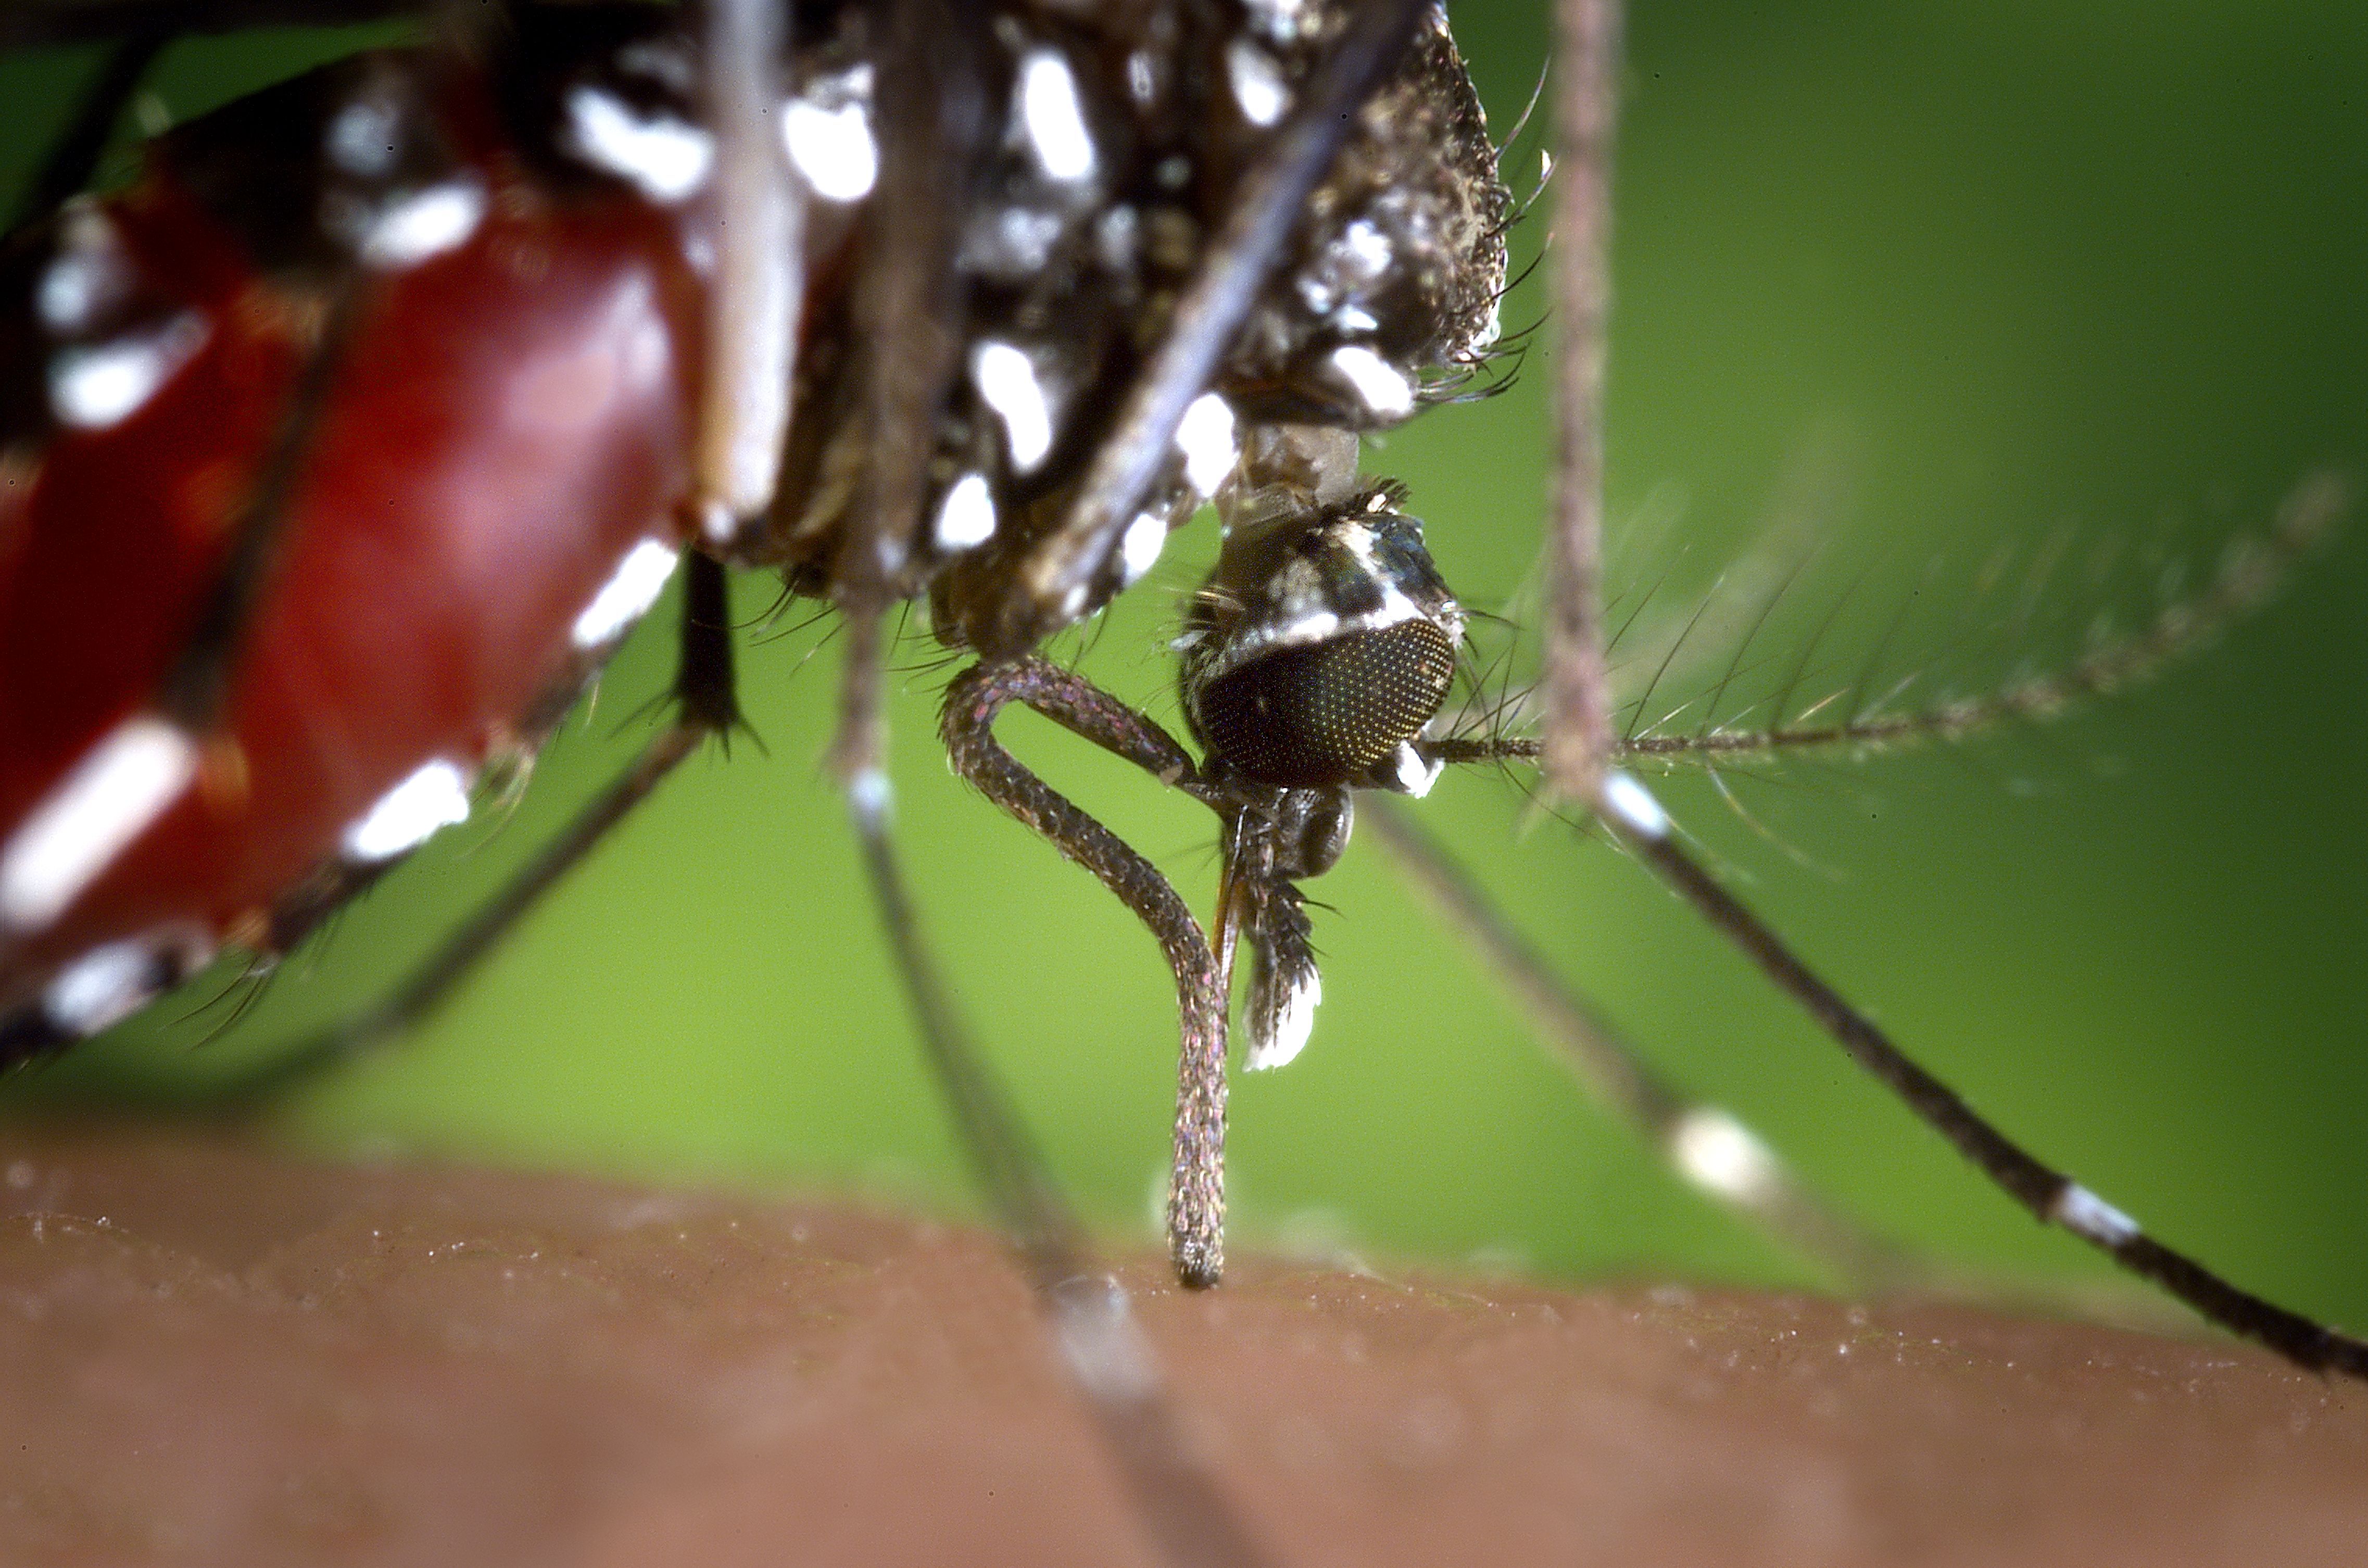 Mosquito free image, public domain image